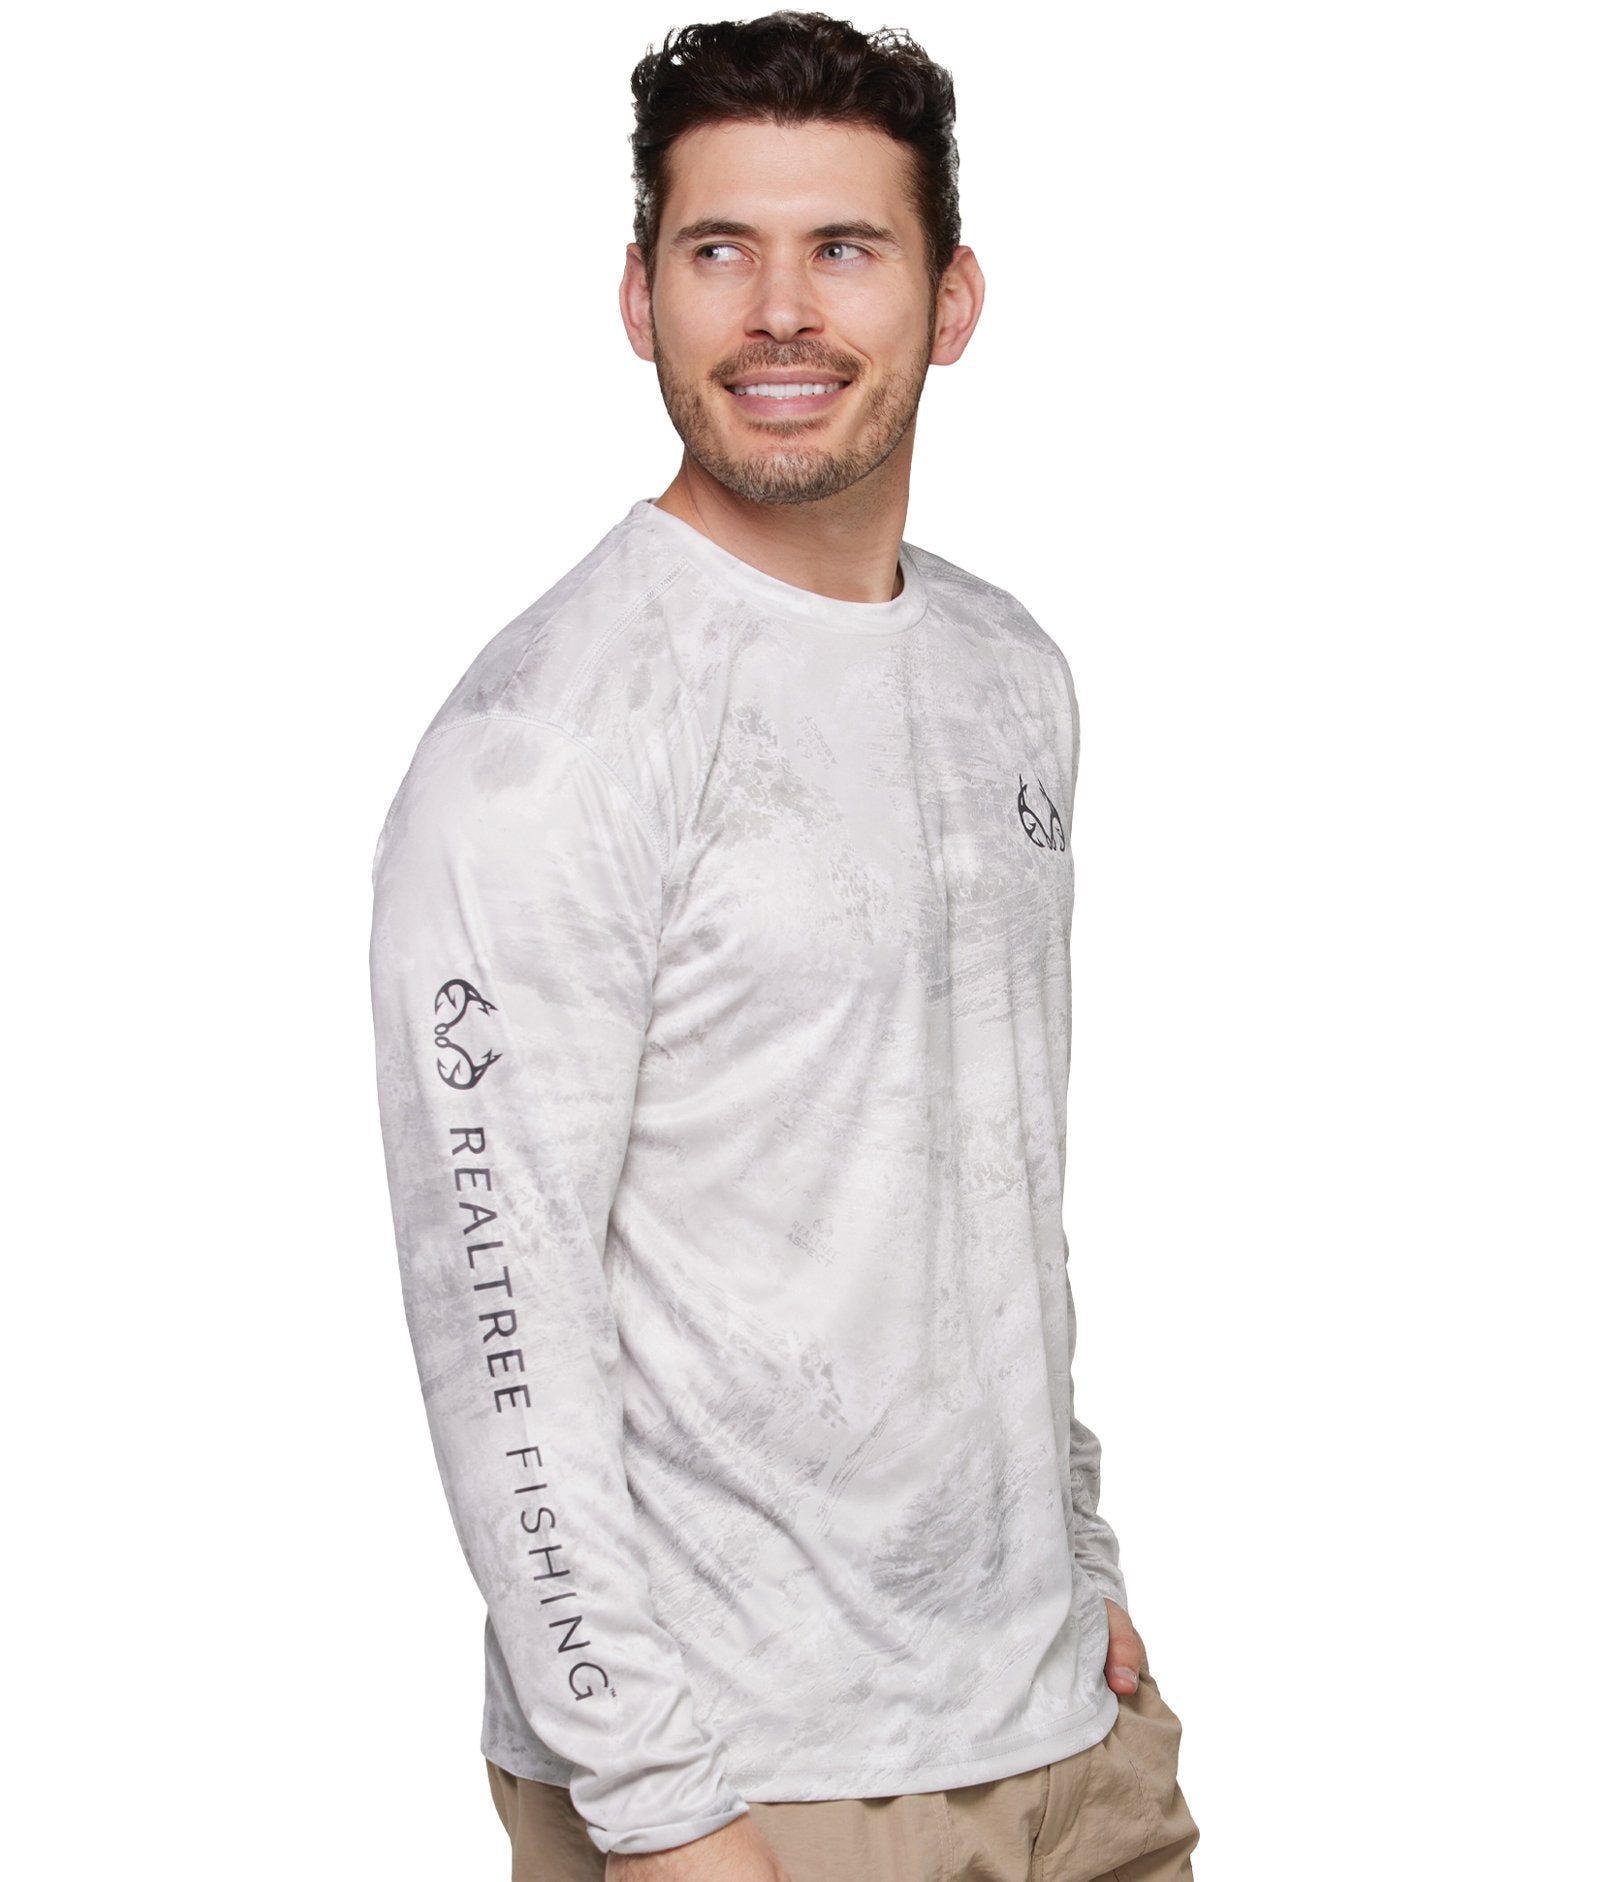 Realtree Mens Camo Performance Long Sleeve Top - White - Medium